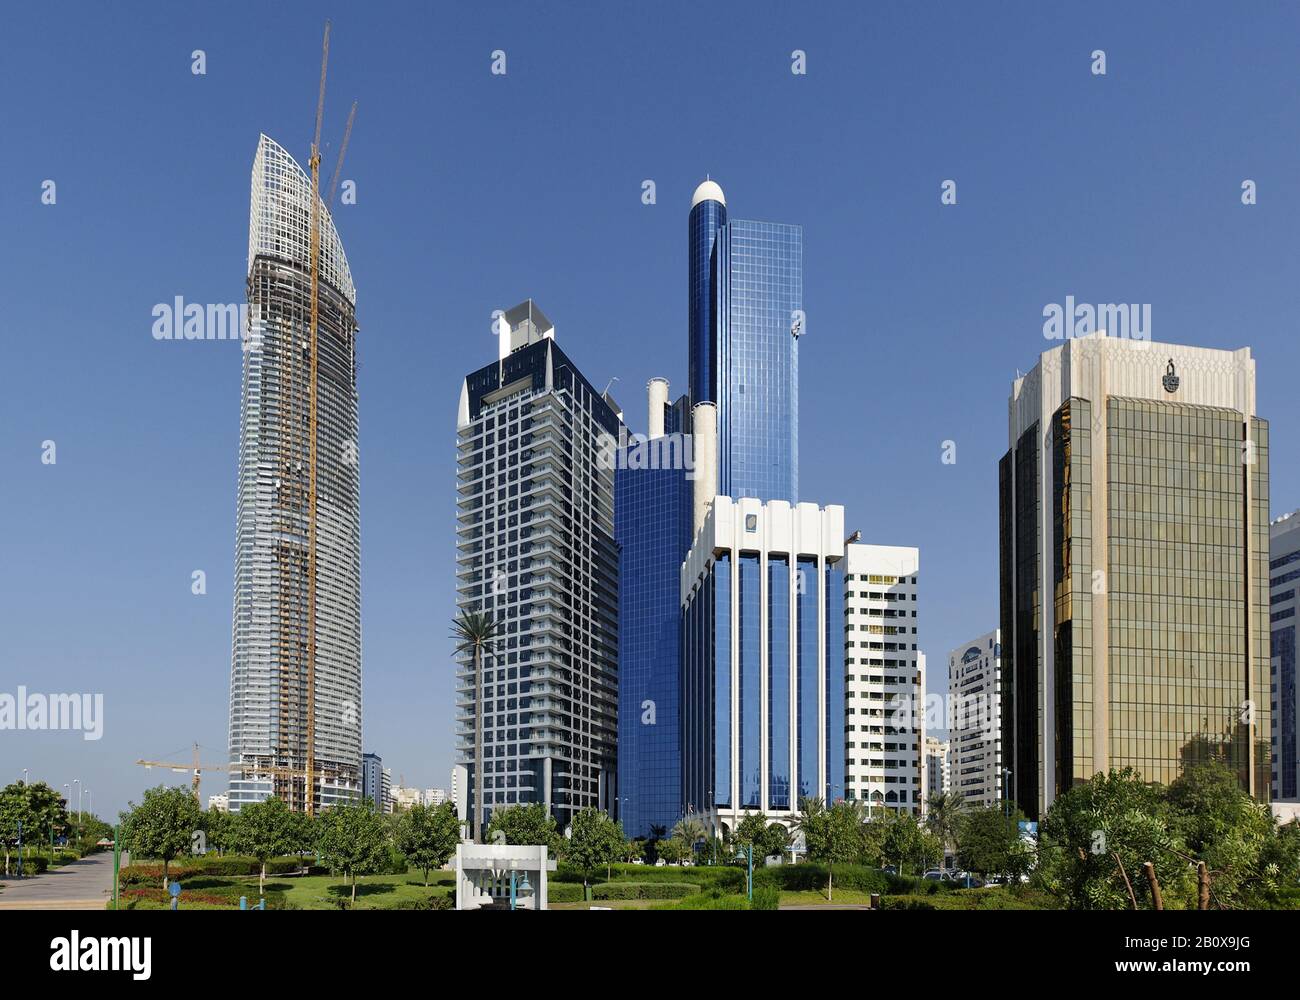 High-rise, Office Building, Al Hosn, Emirate of Abu Dhabi, United Arab Emirates, Middle East, Asia, Stock Photo